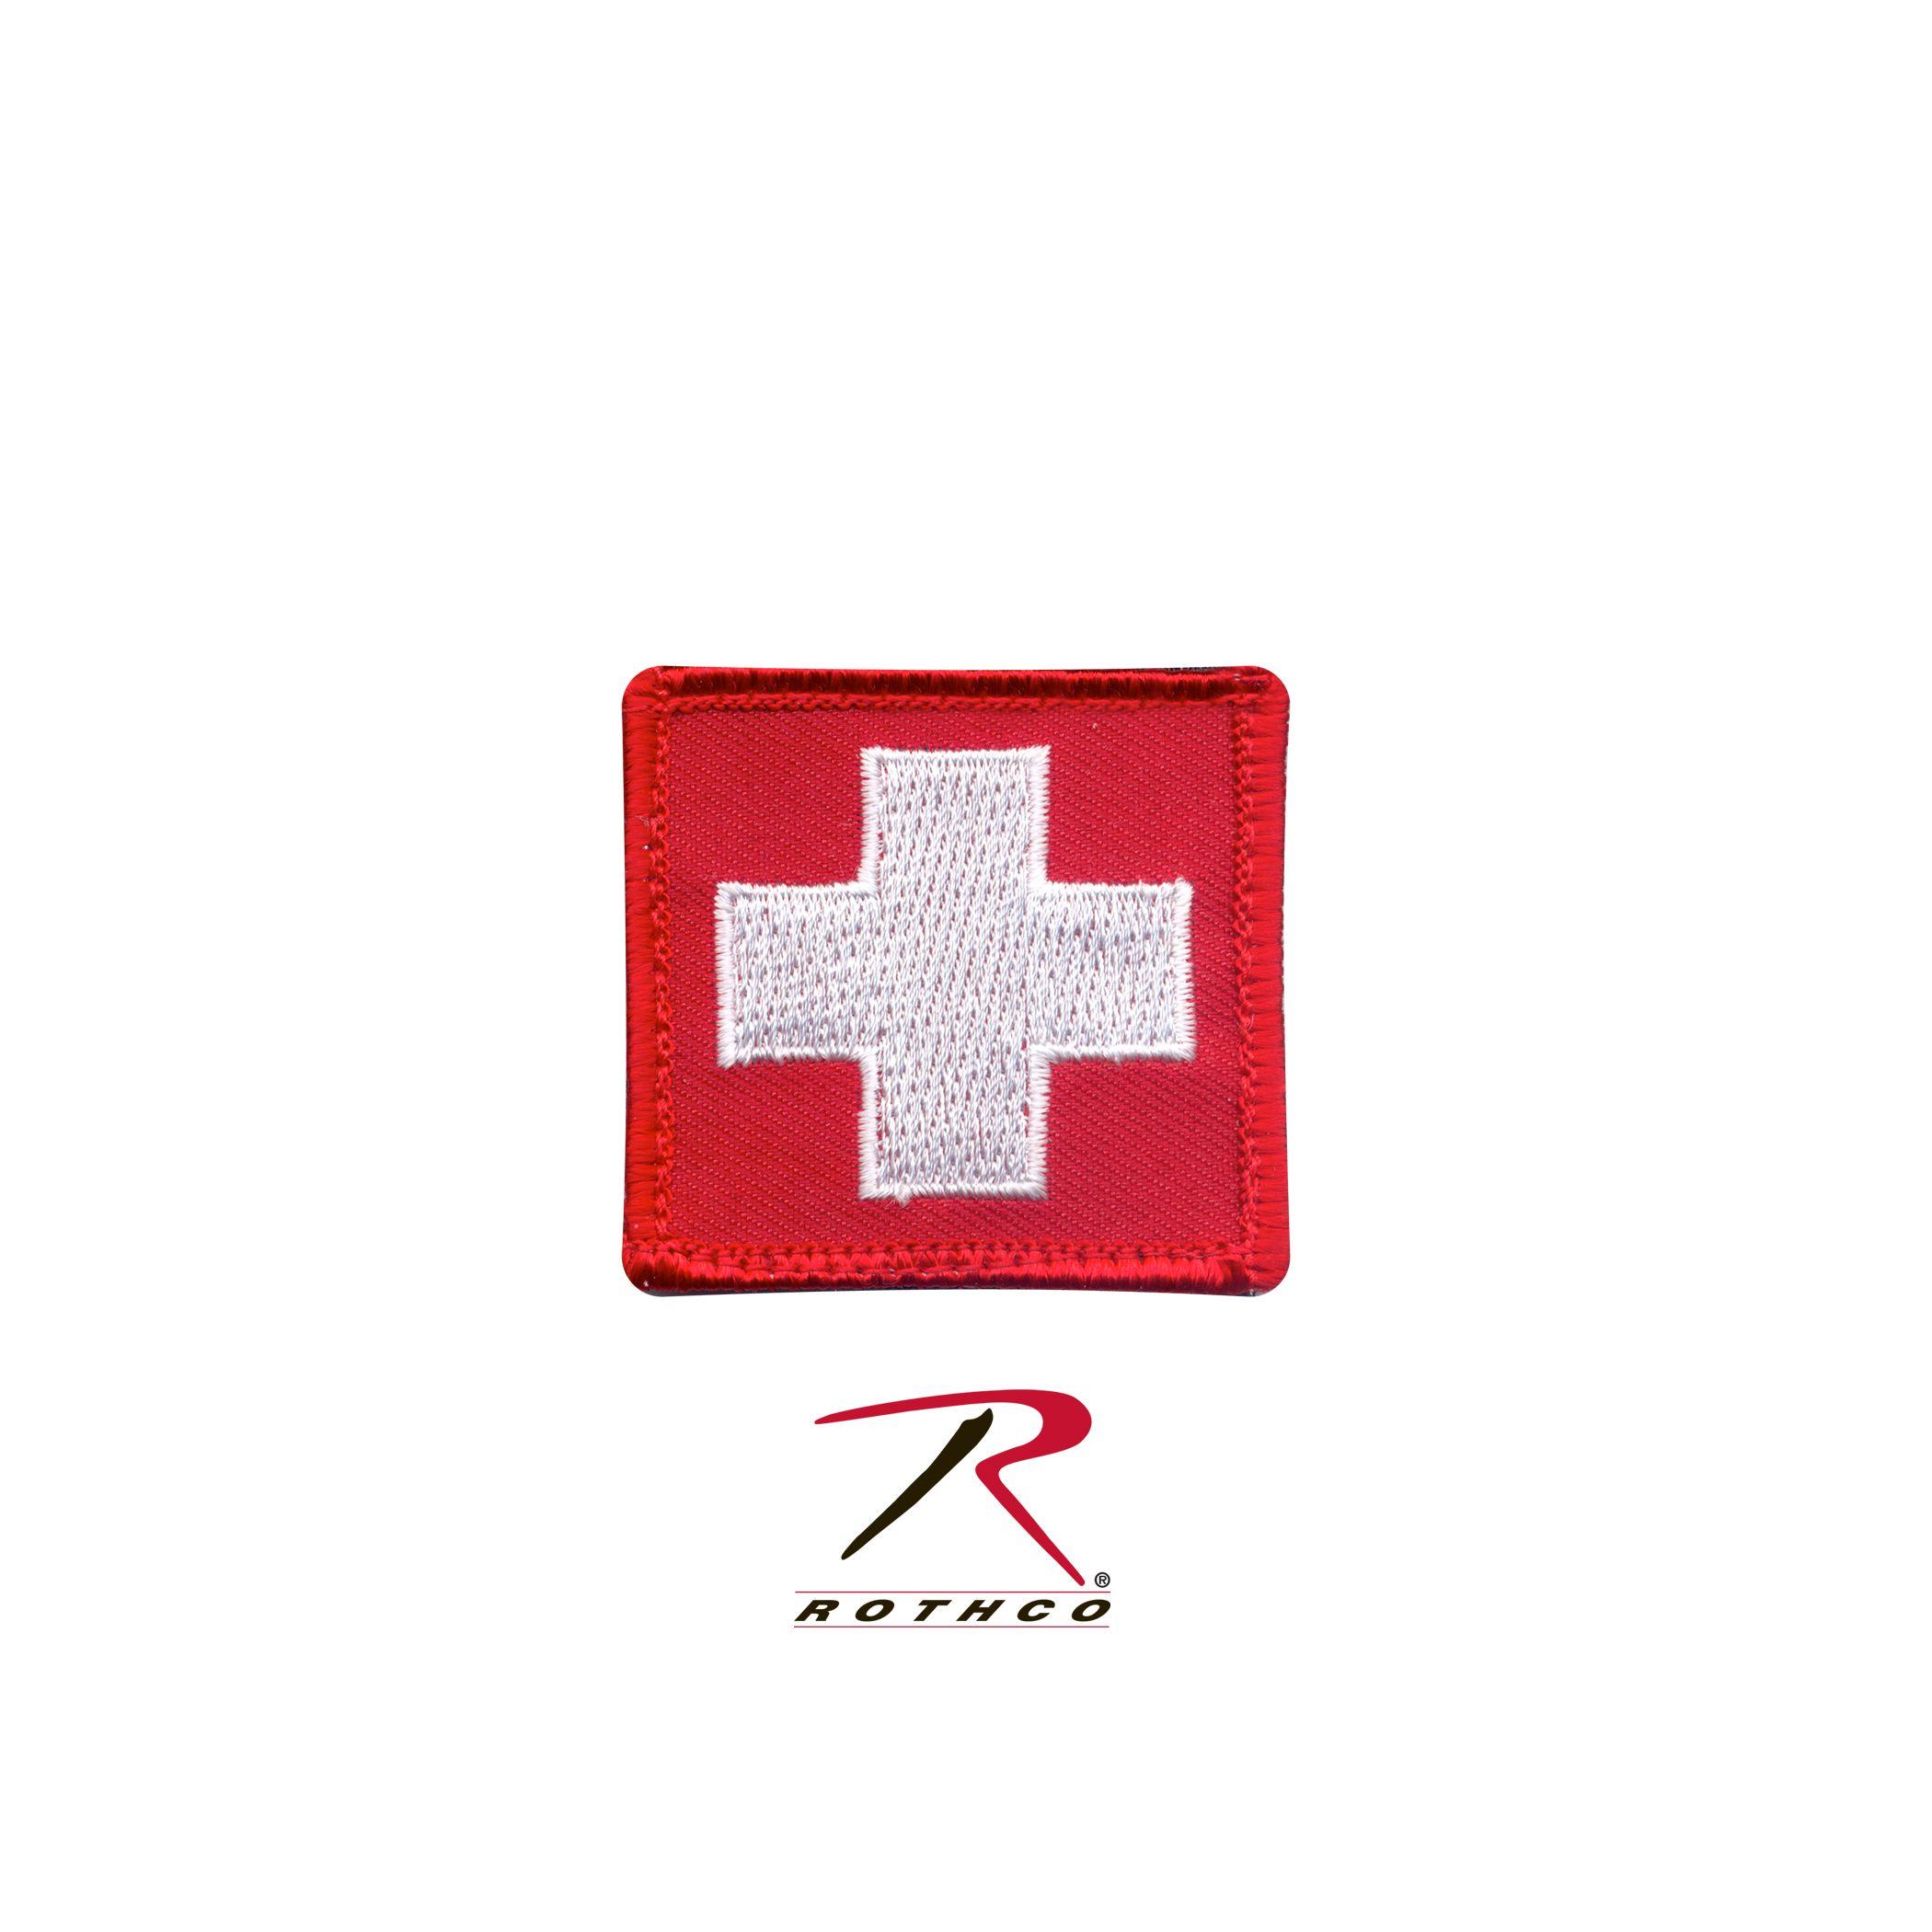 Red Square Box Logo - Red square white cross Logos